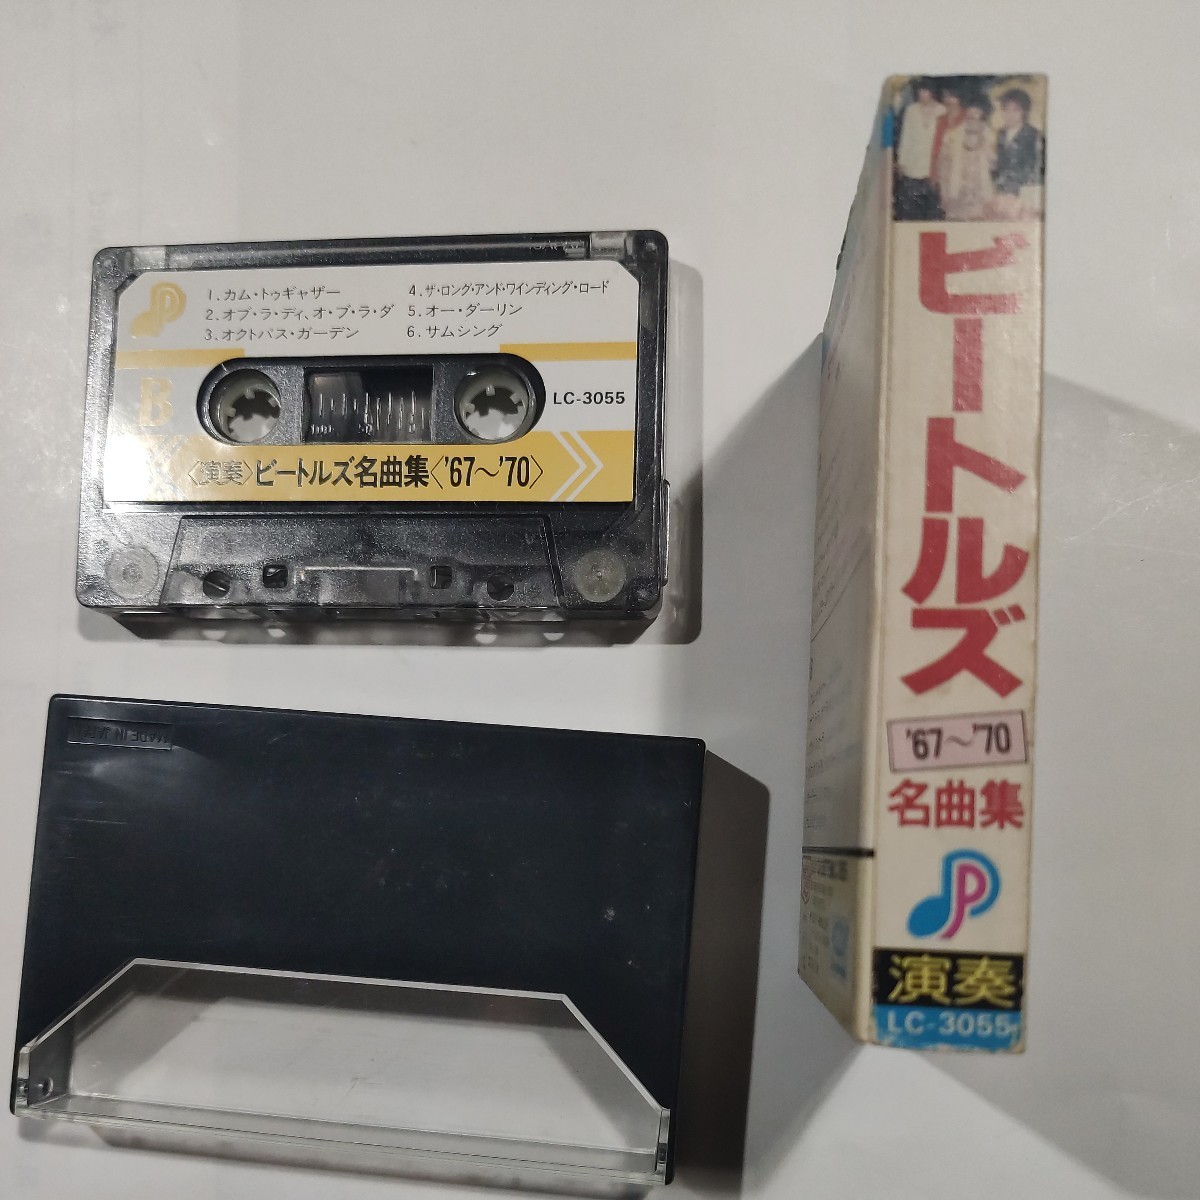 LC-3055 Pachi son Beatles *67~*70 masterpiece compilation cassette tape 